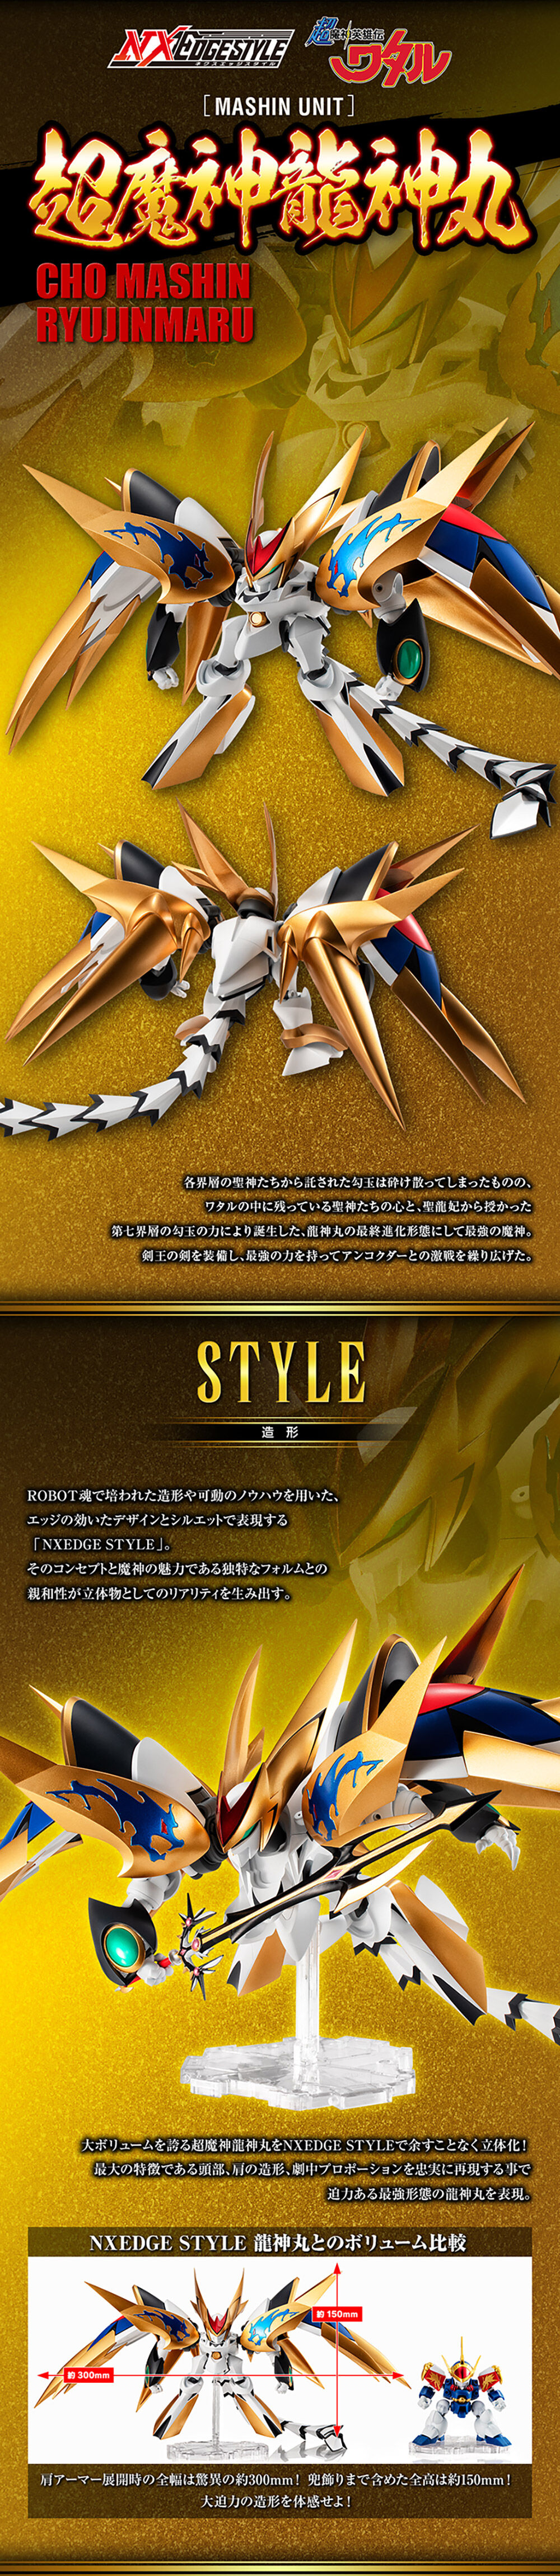 NX EDGE STYLE 限定及特别版超魔神龙神丸